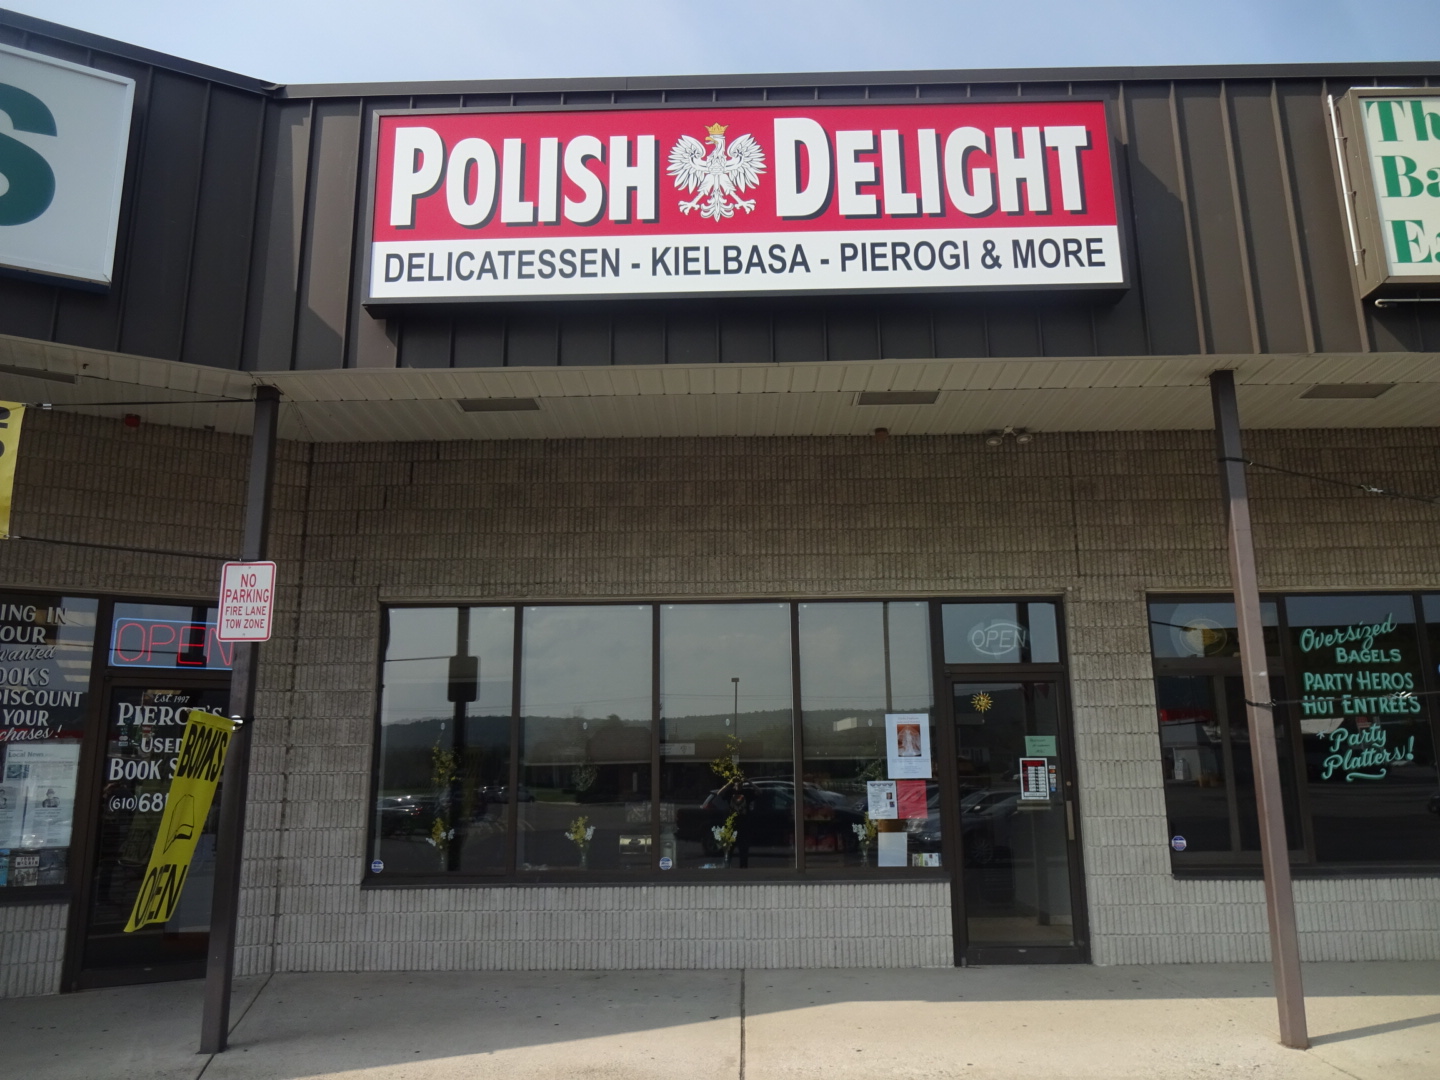 Polish Delight